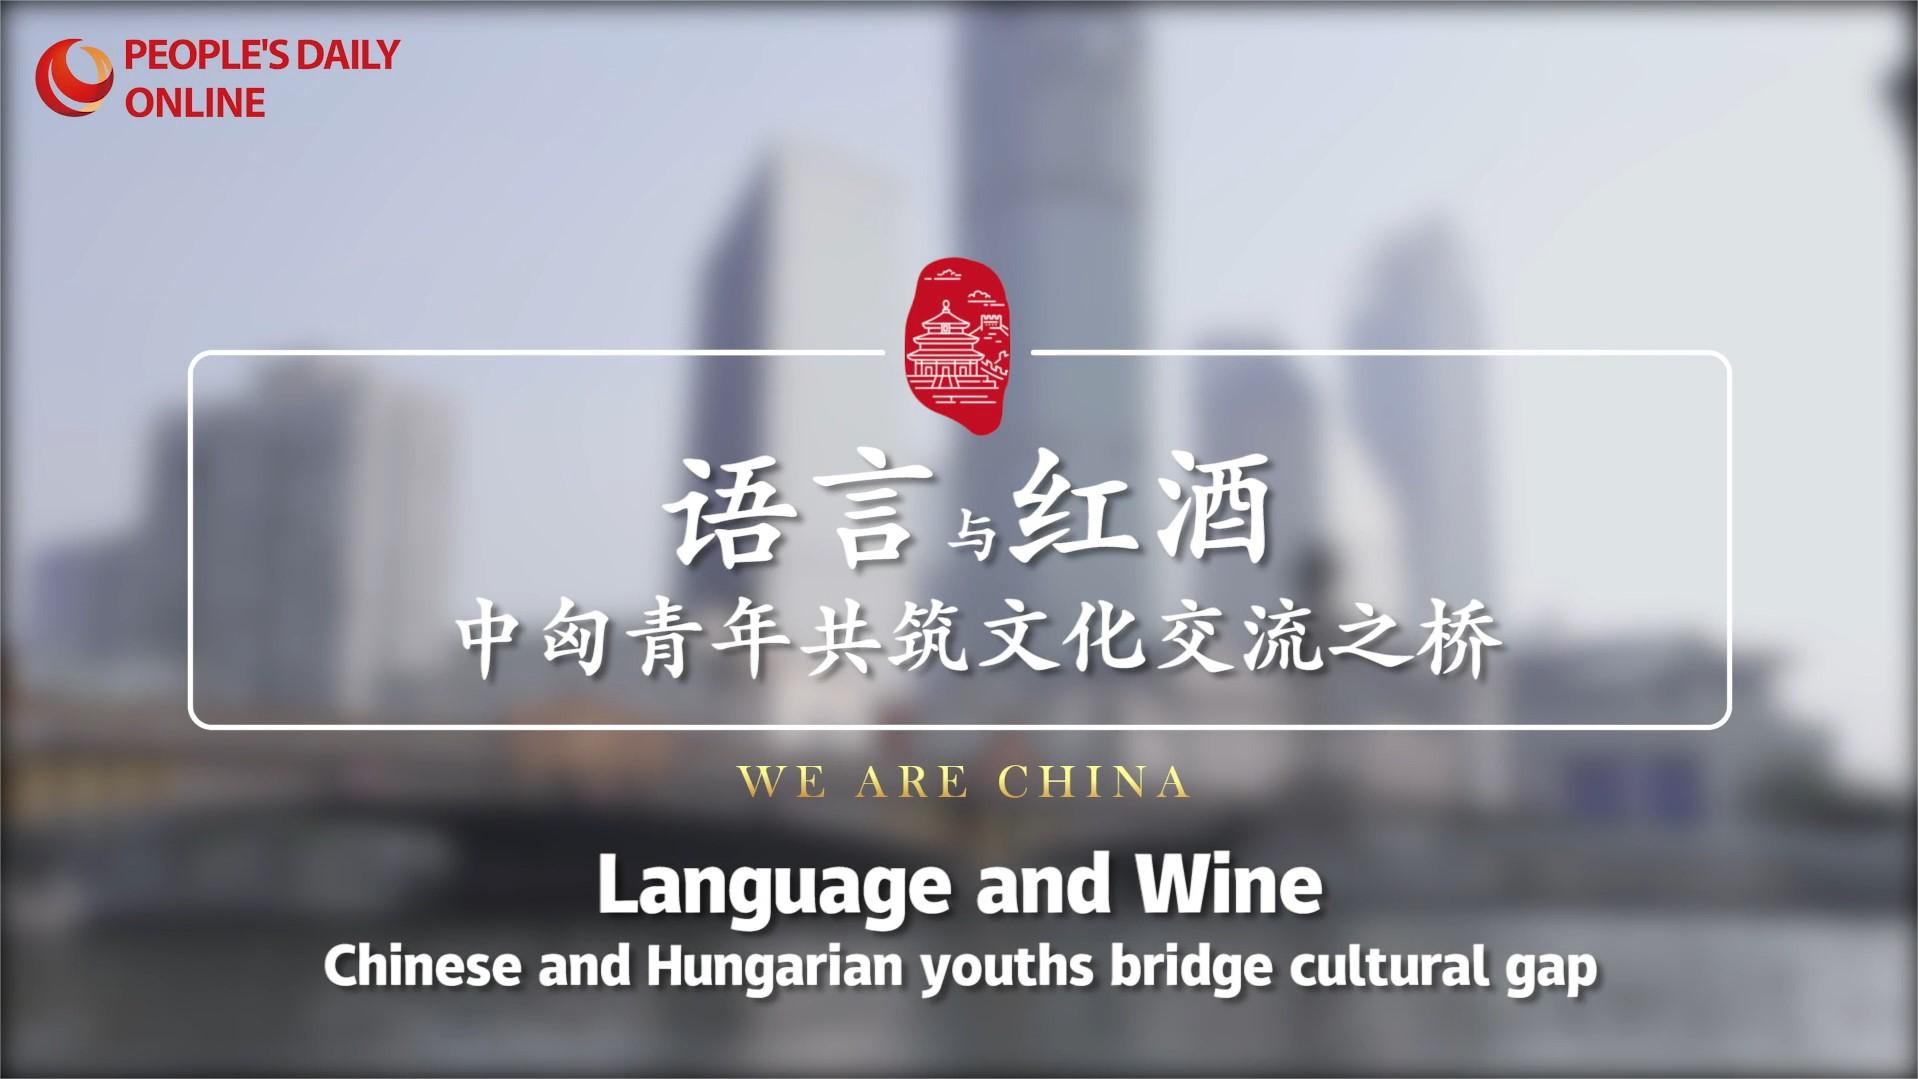 Young people bridge cultural ties as China-Hungary bonds deepen